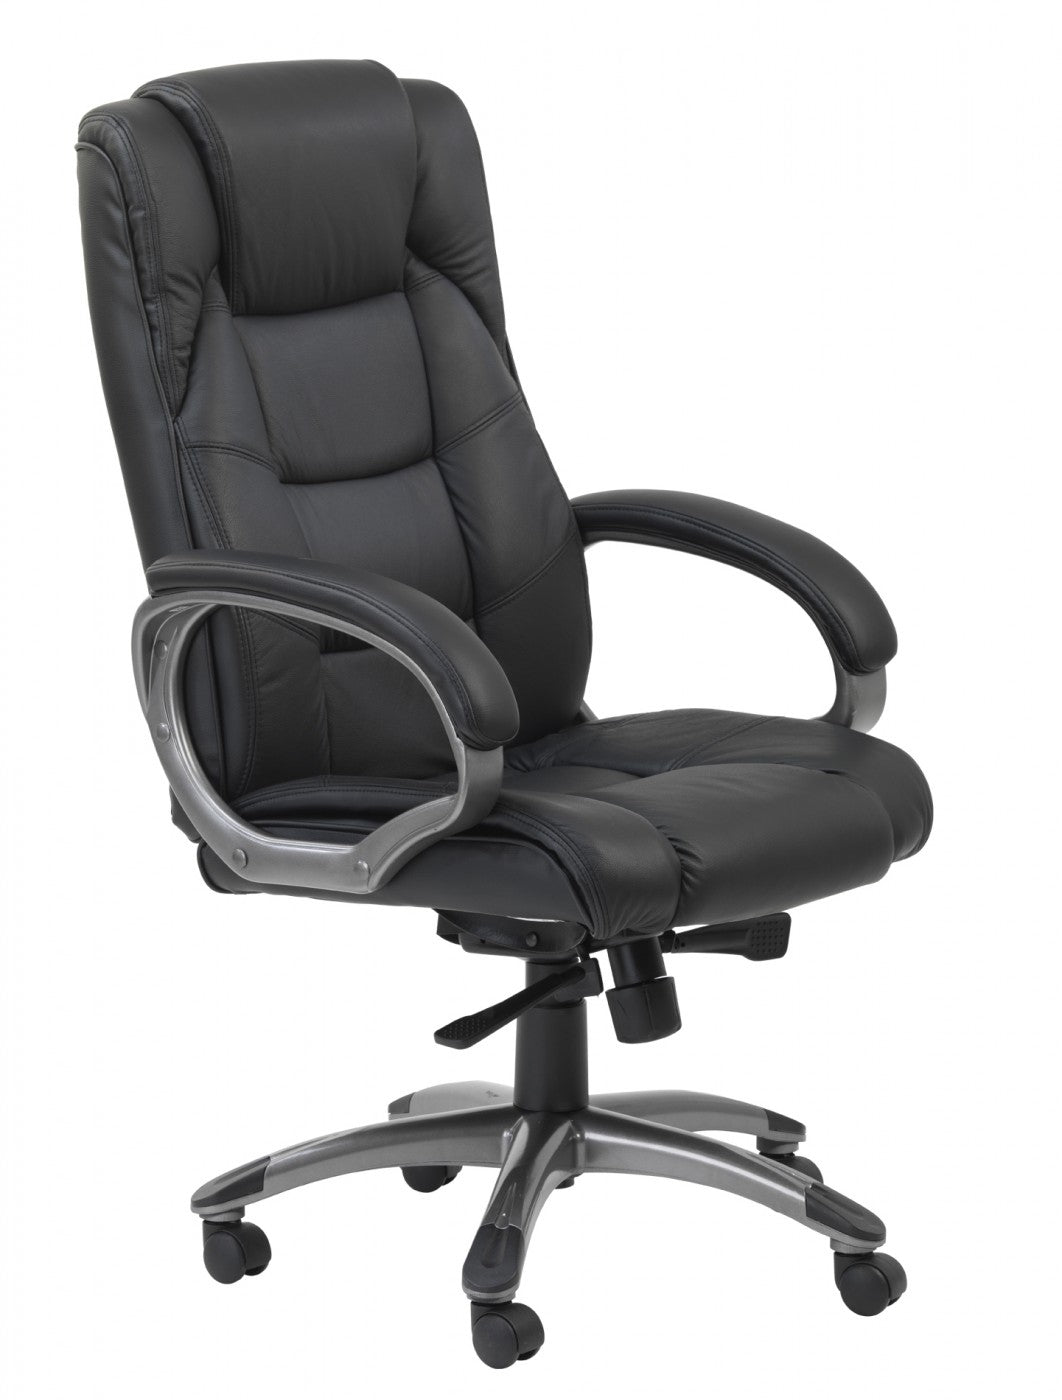 Northland Black High Back Leather Chair - AOC6332-L-BK UK